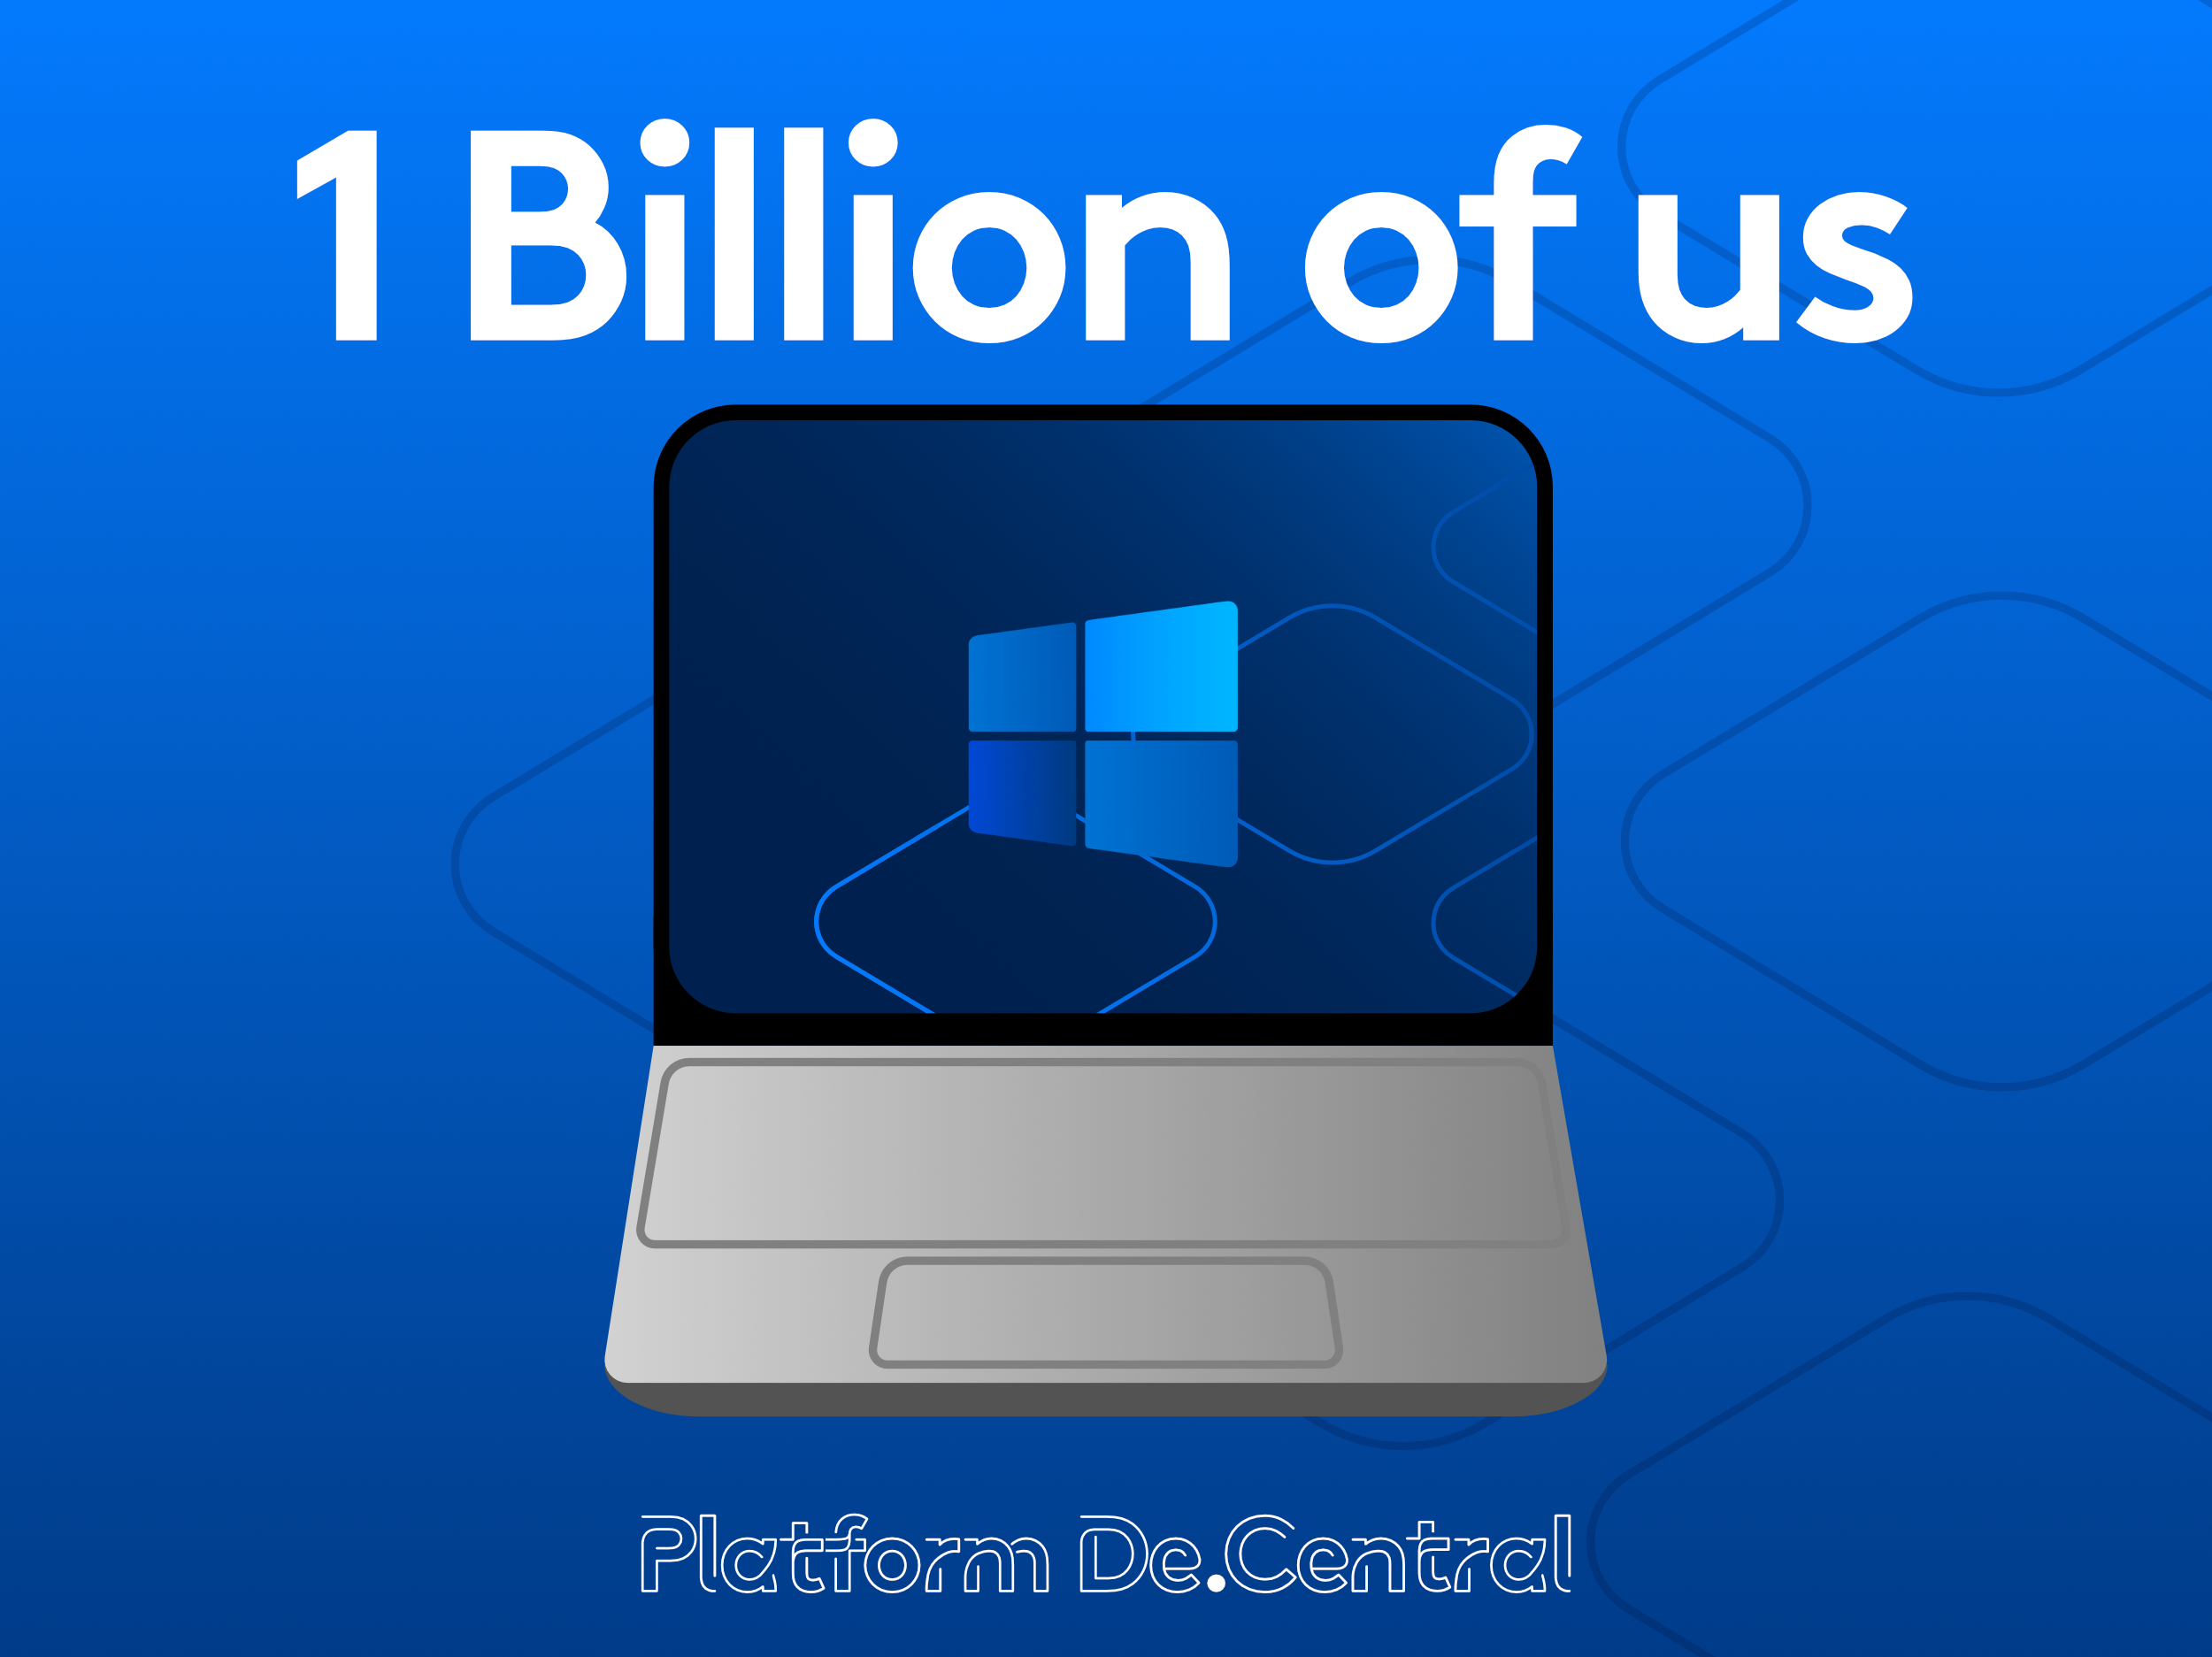 Windows 10 powered by 1 Billion of us